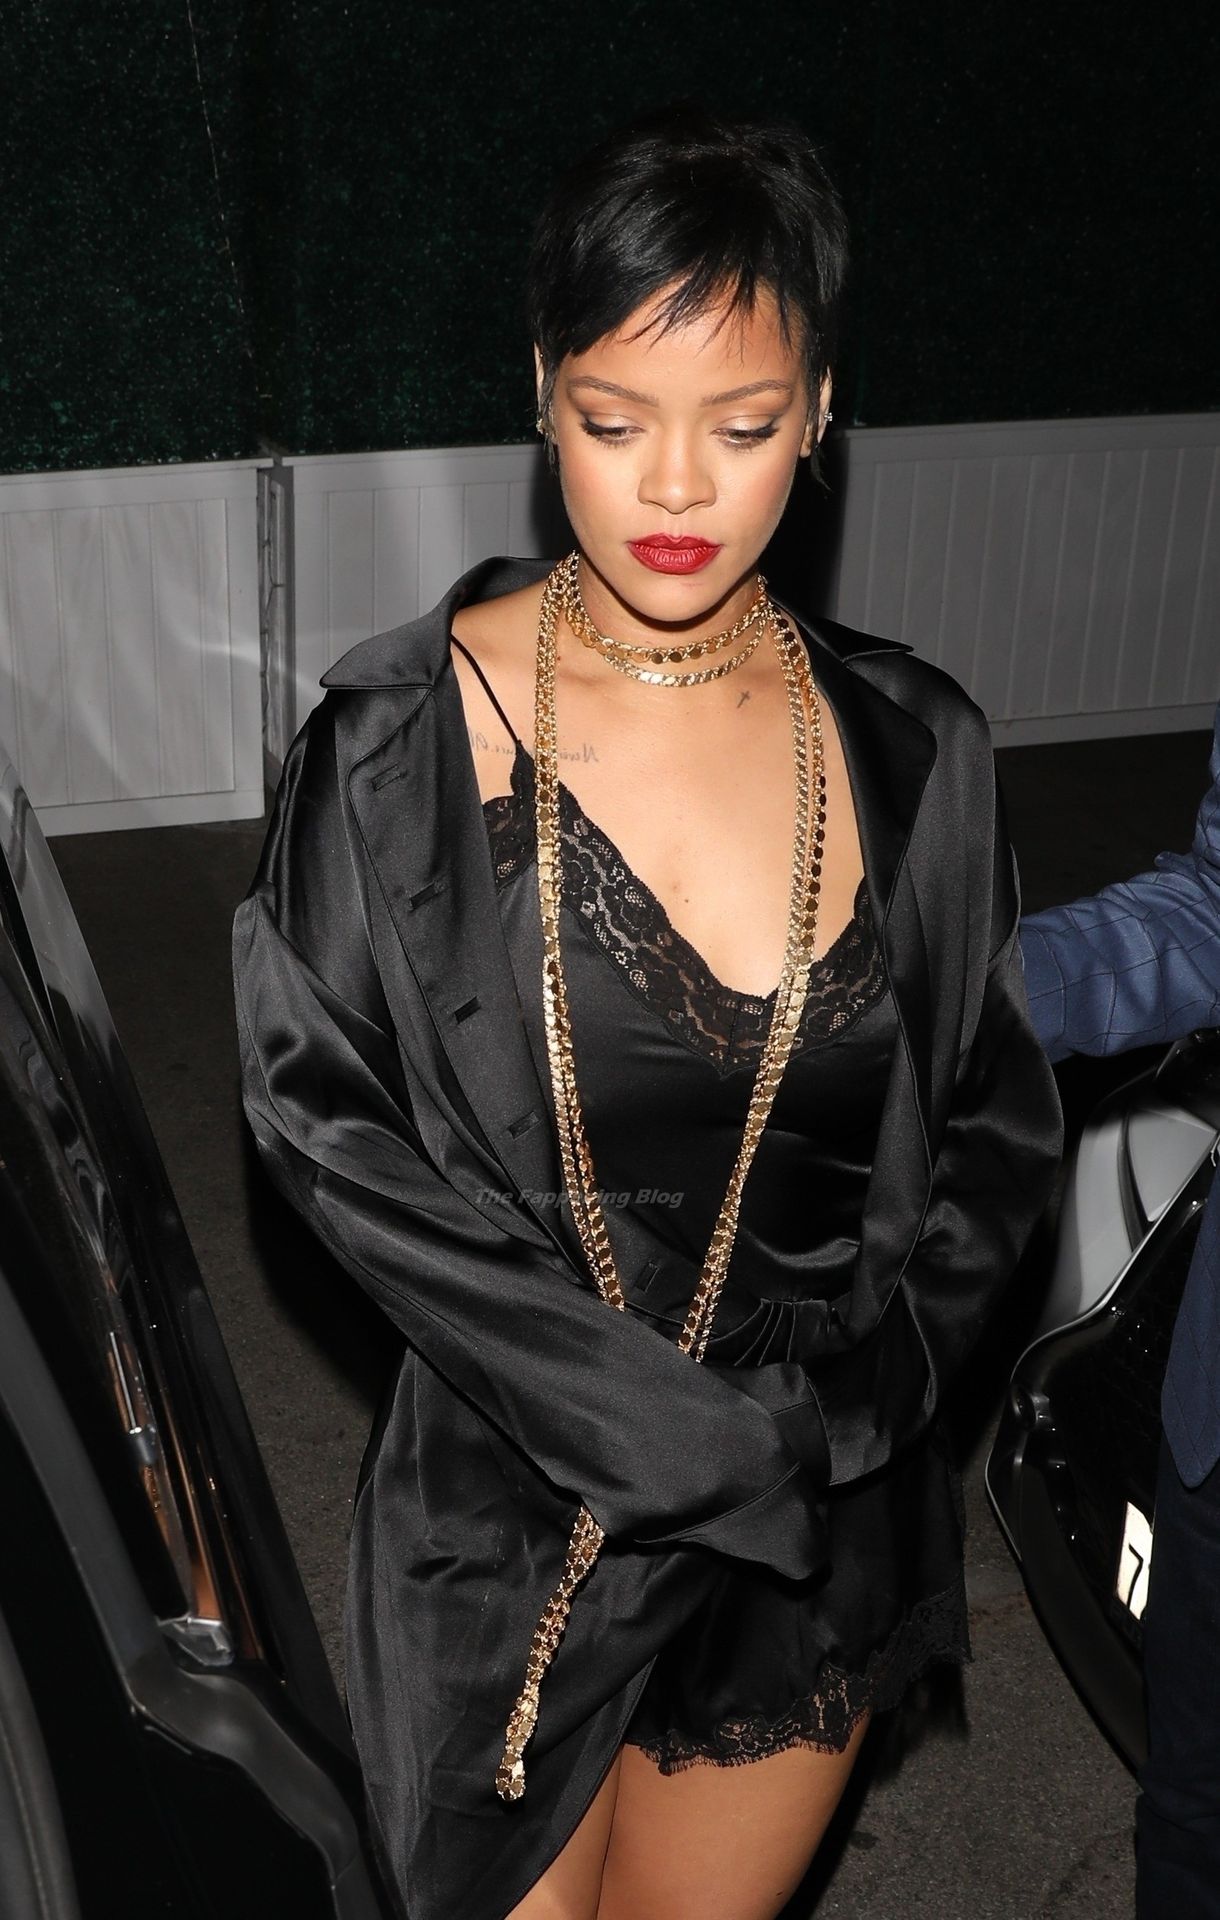 Rihanna-Sexy-The-Fappening-Blog-6.jpg